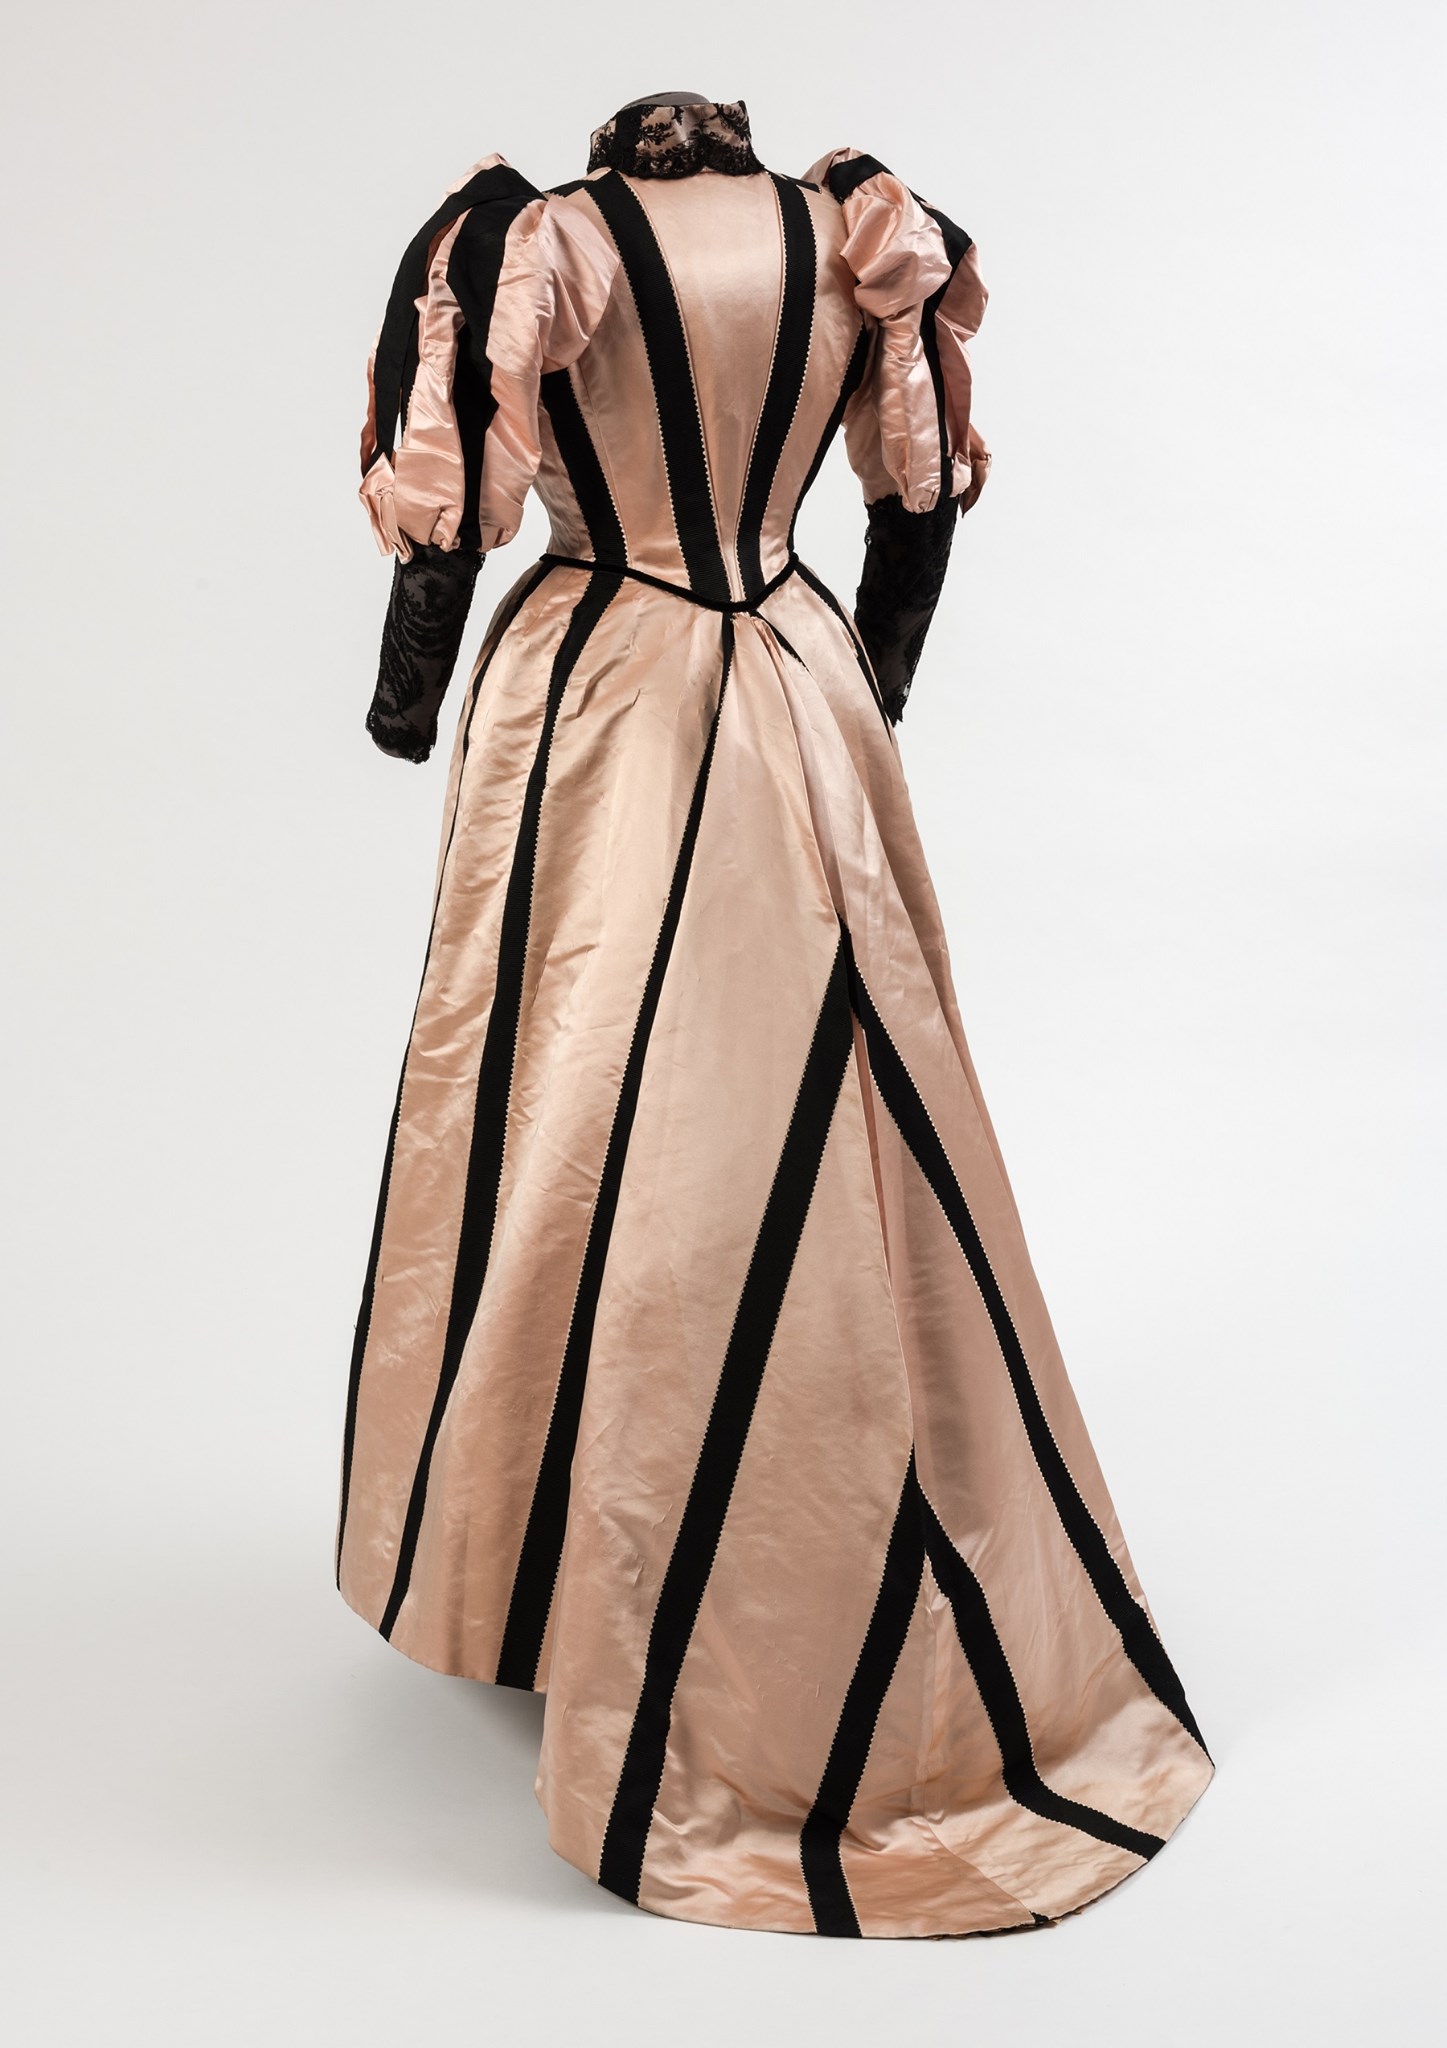 Dress, 1893, Duboys, Paris, silk, French, Fashion Museum Bath